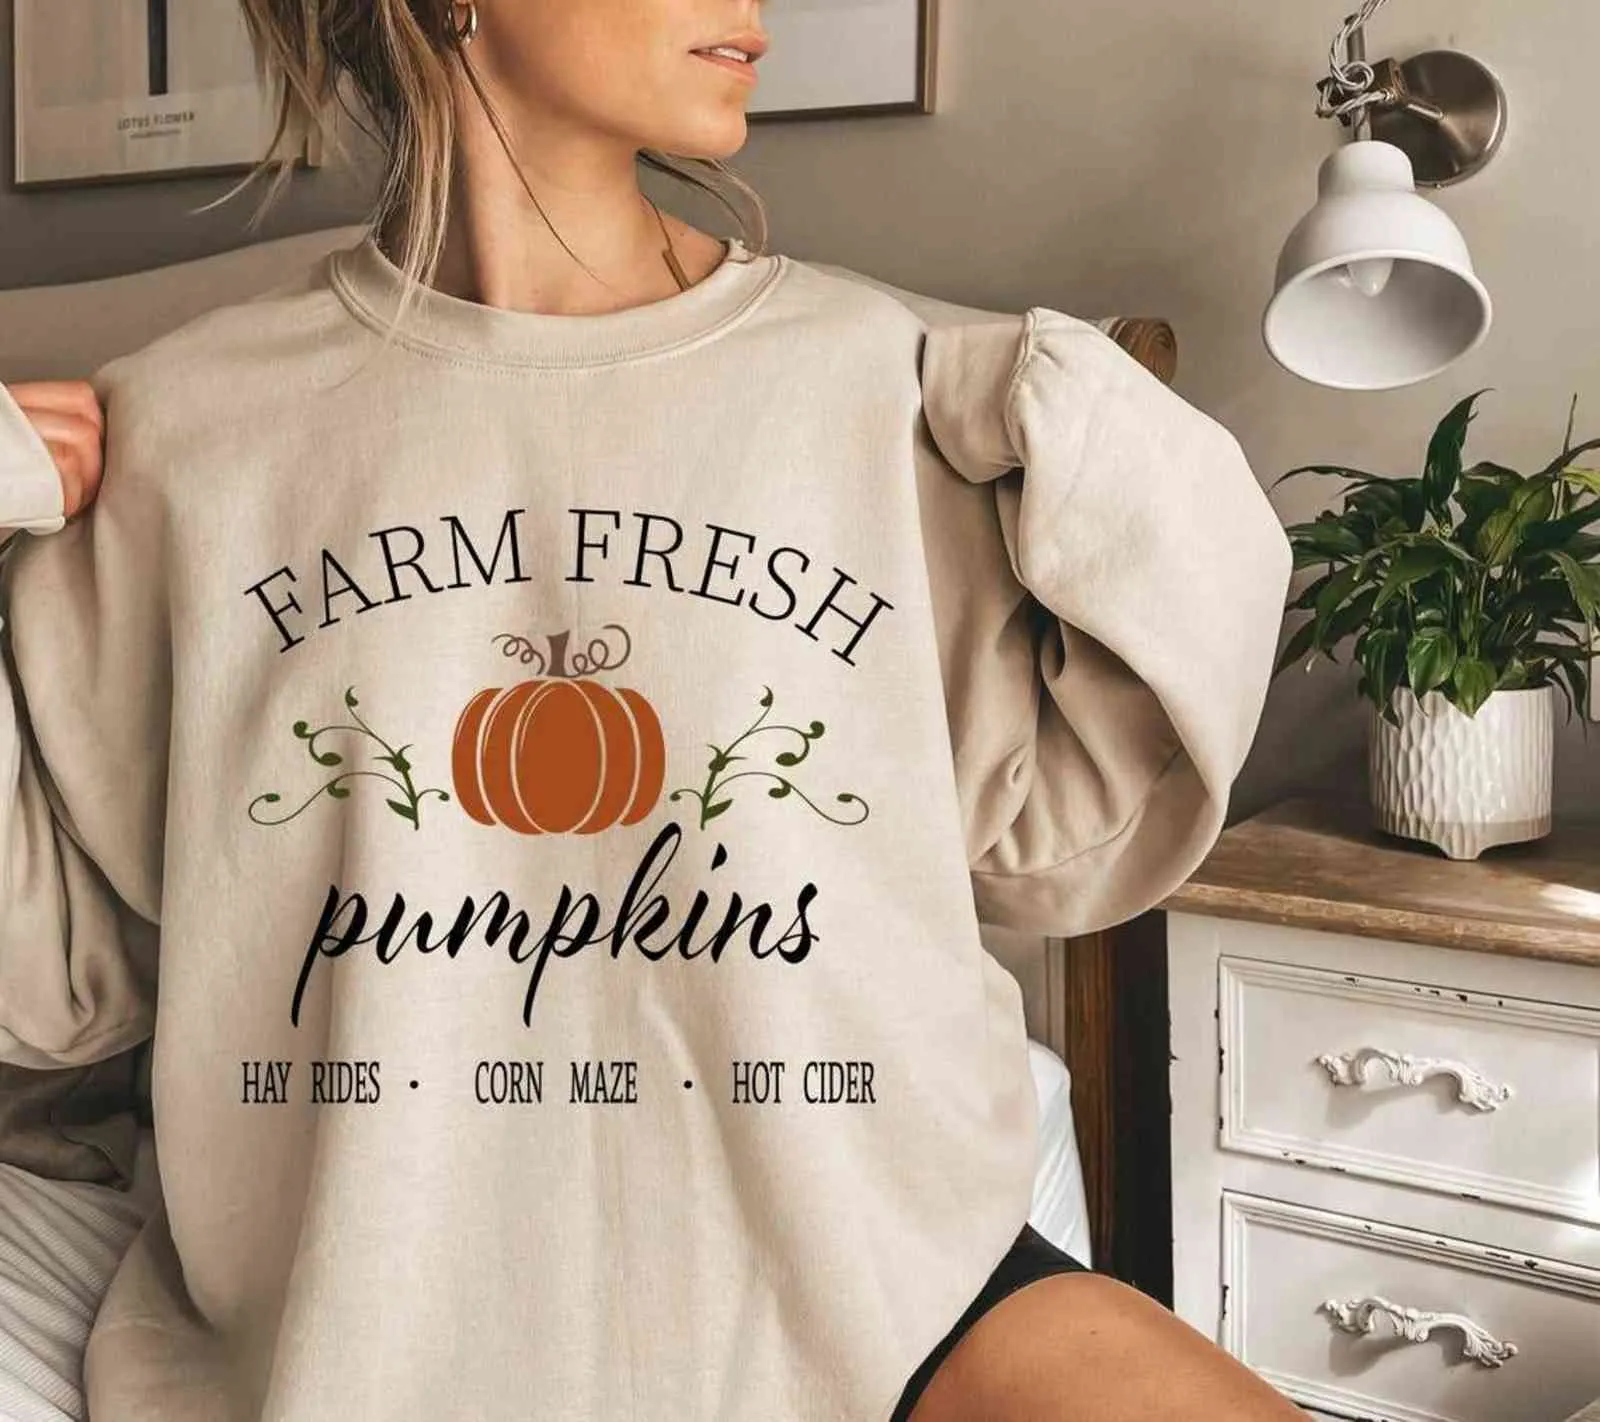 Upadek Bluza Farm Fresh Pumpkins Bluza Unisex Ins Moda Crewneck Koszula Para Halloween Klasyczny Festiwal Top 211108